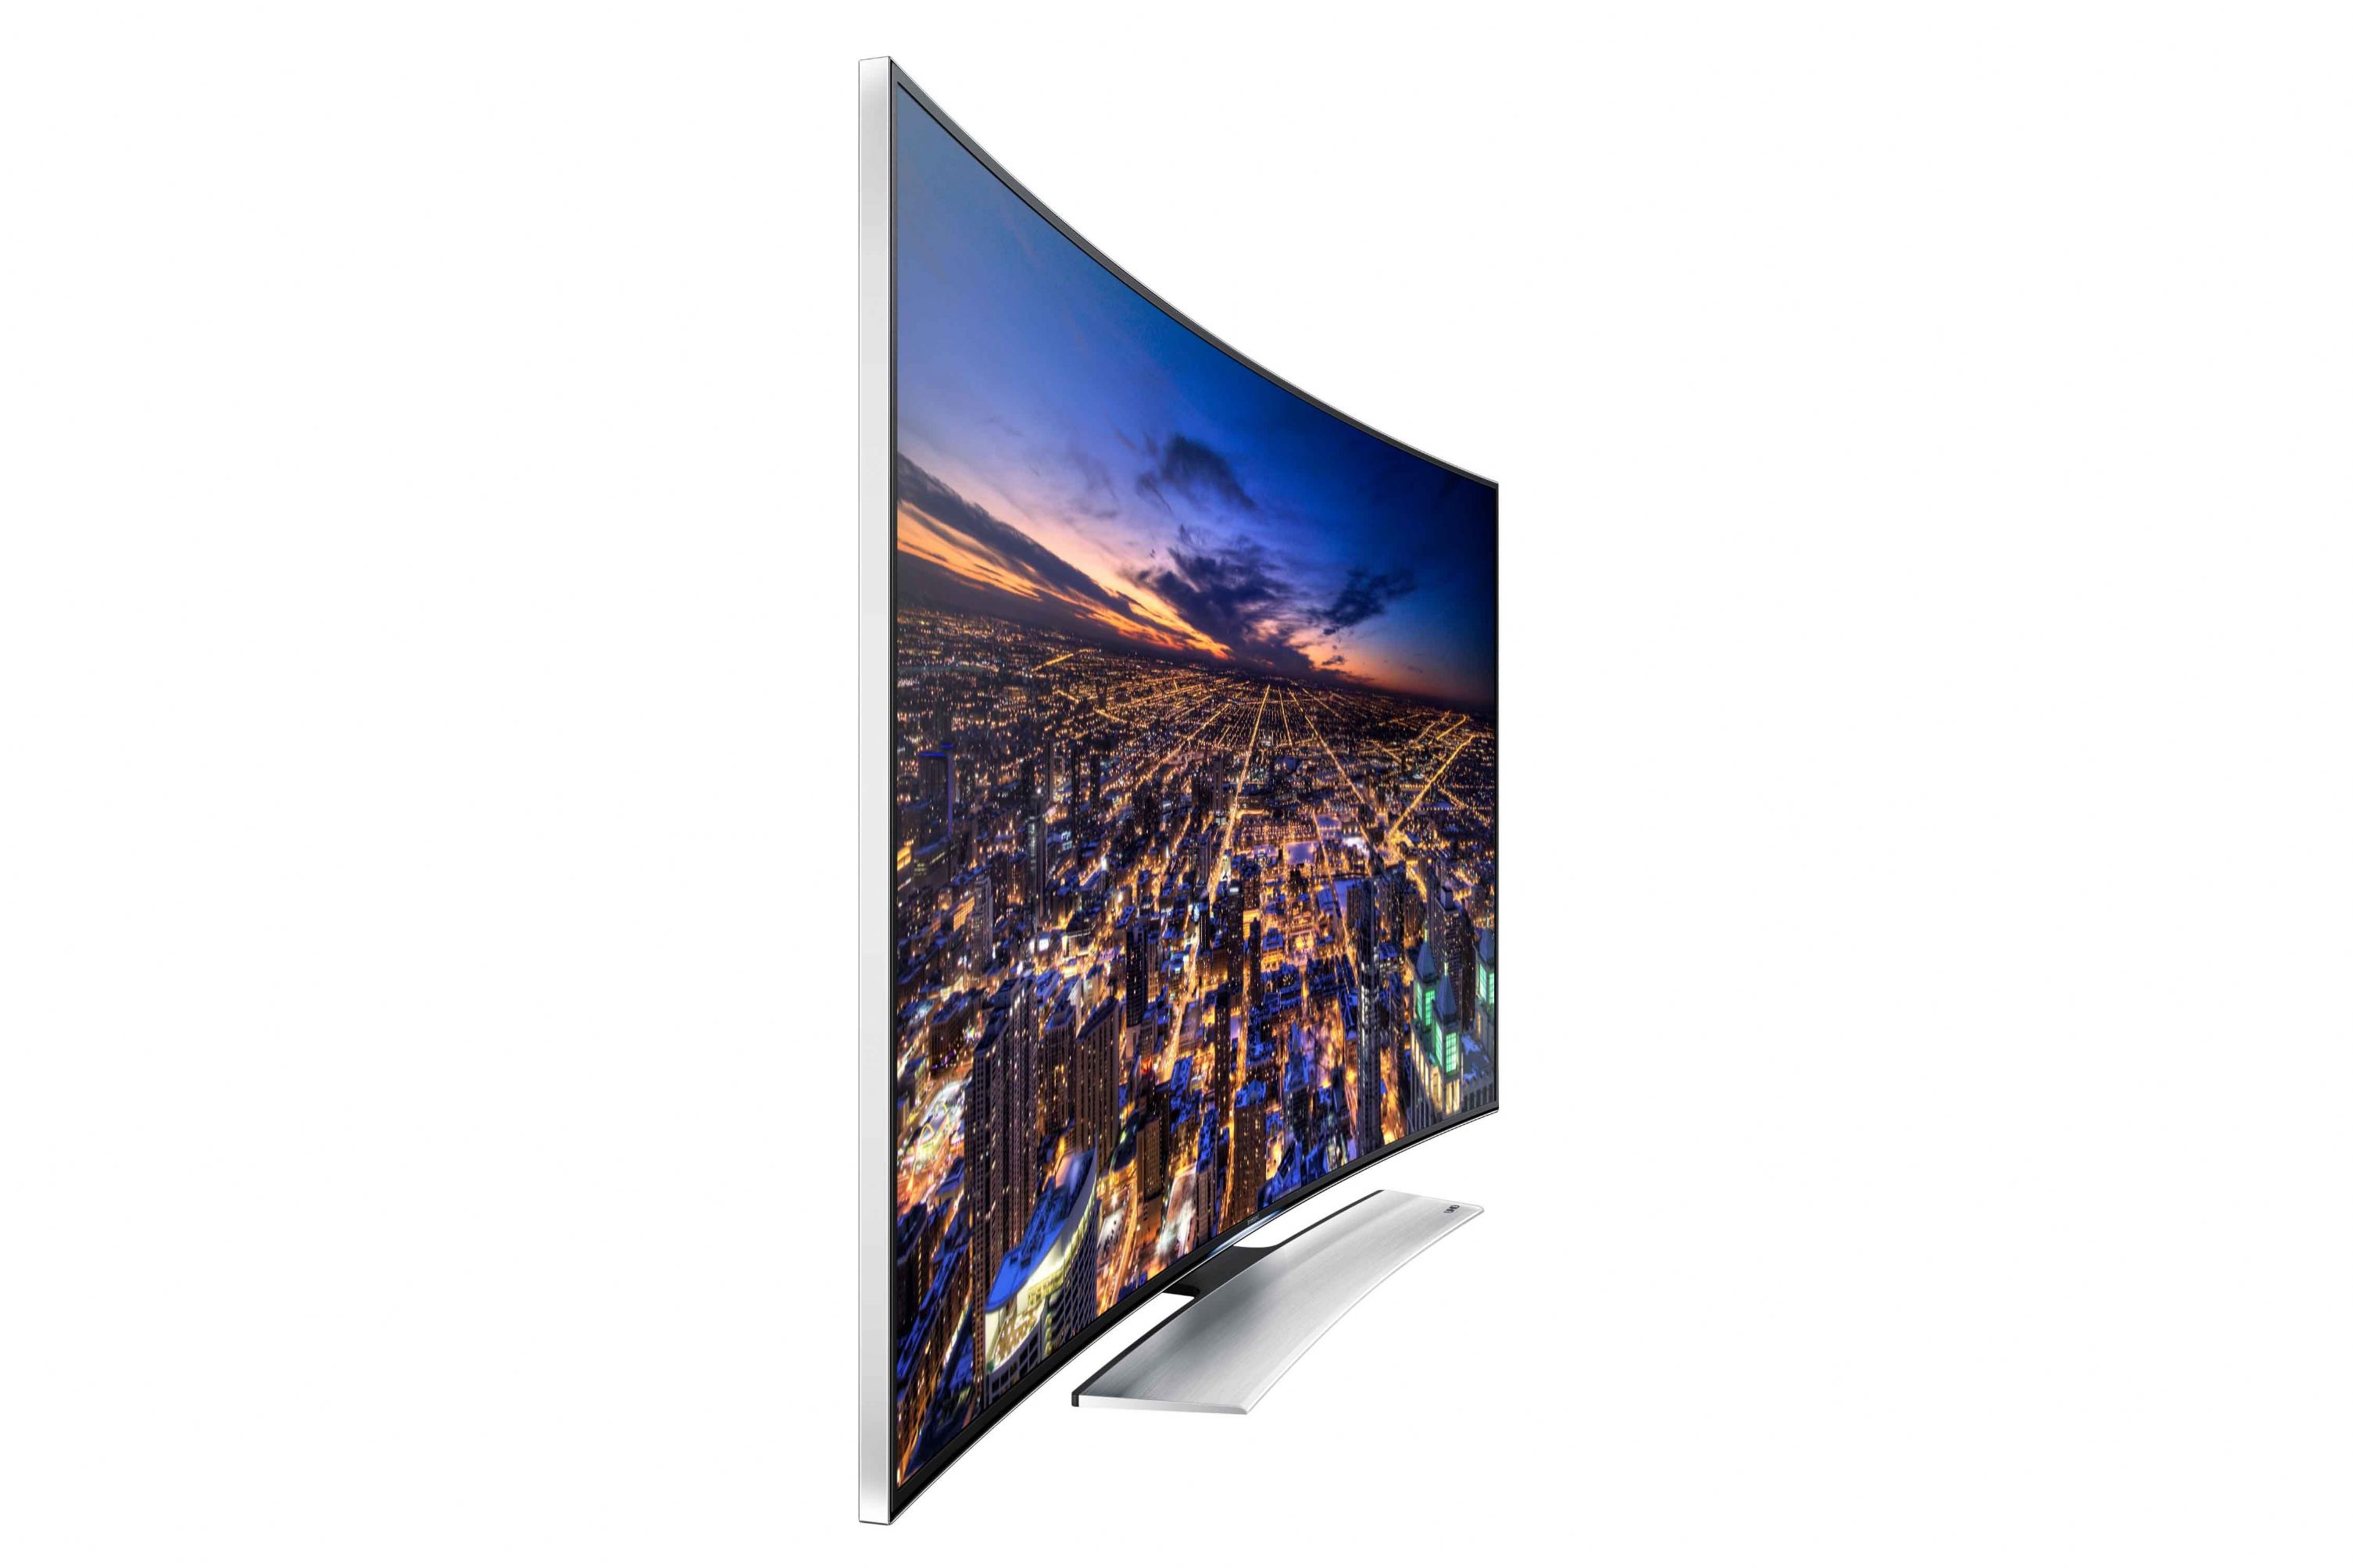 Samsung Led 3d Full Hd Smart Tv